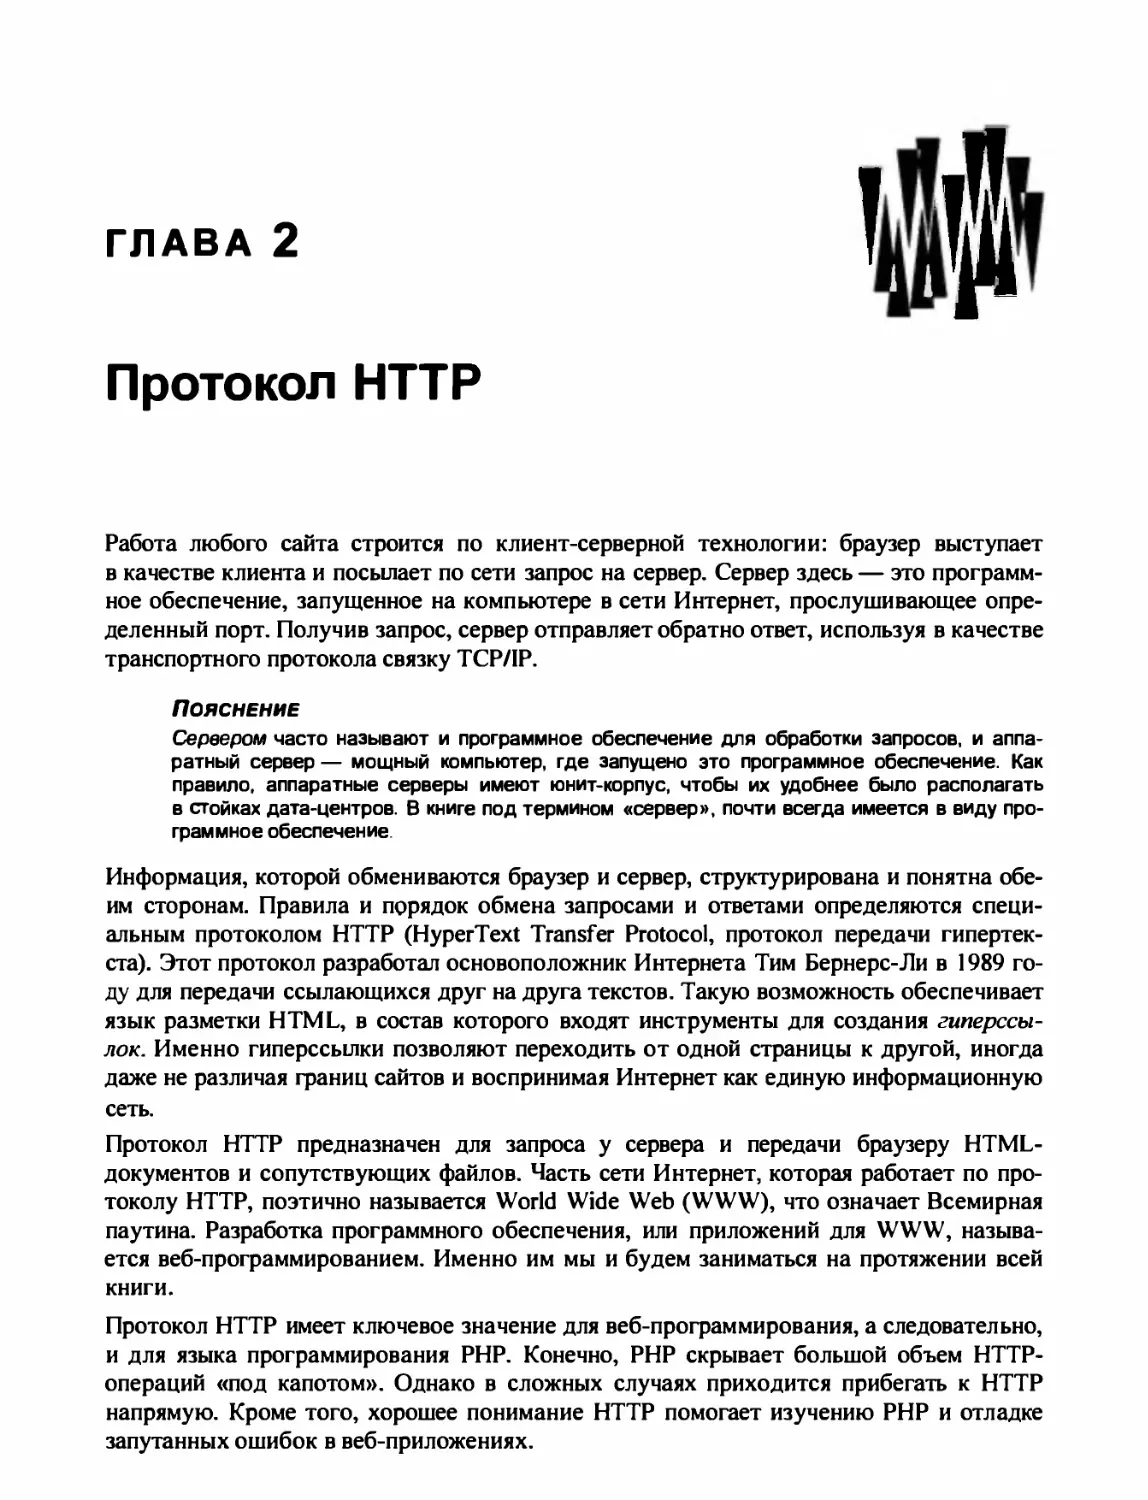 2. Протокол HTTP